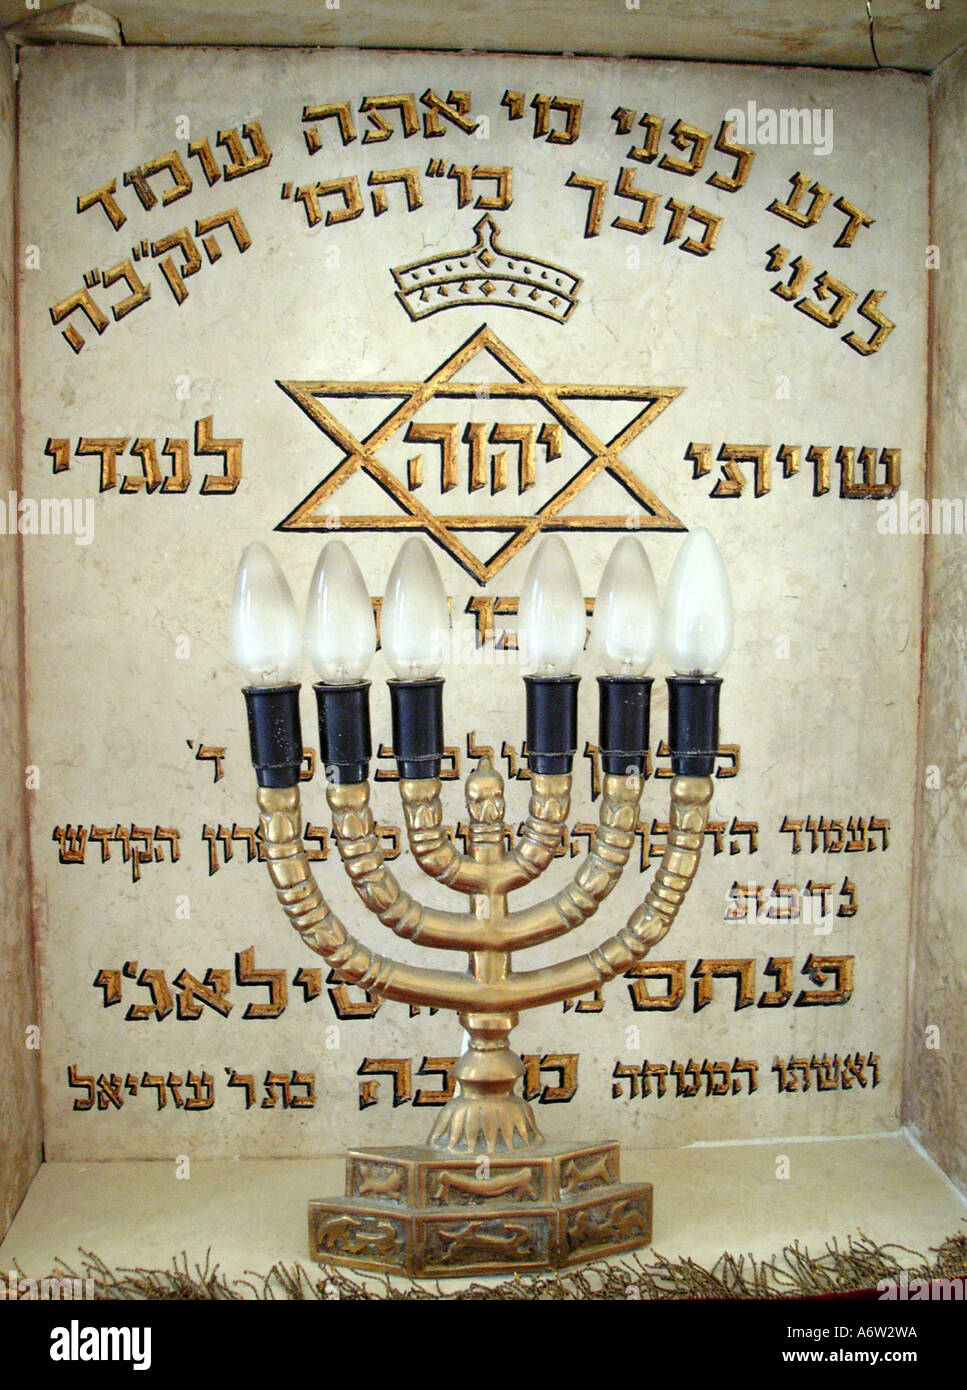 Jewish Synagogue alter with Menorah Candelabra Stock Photo